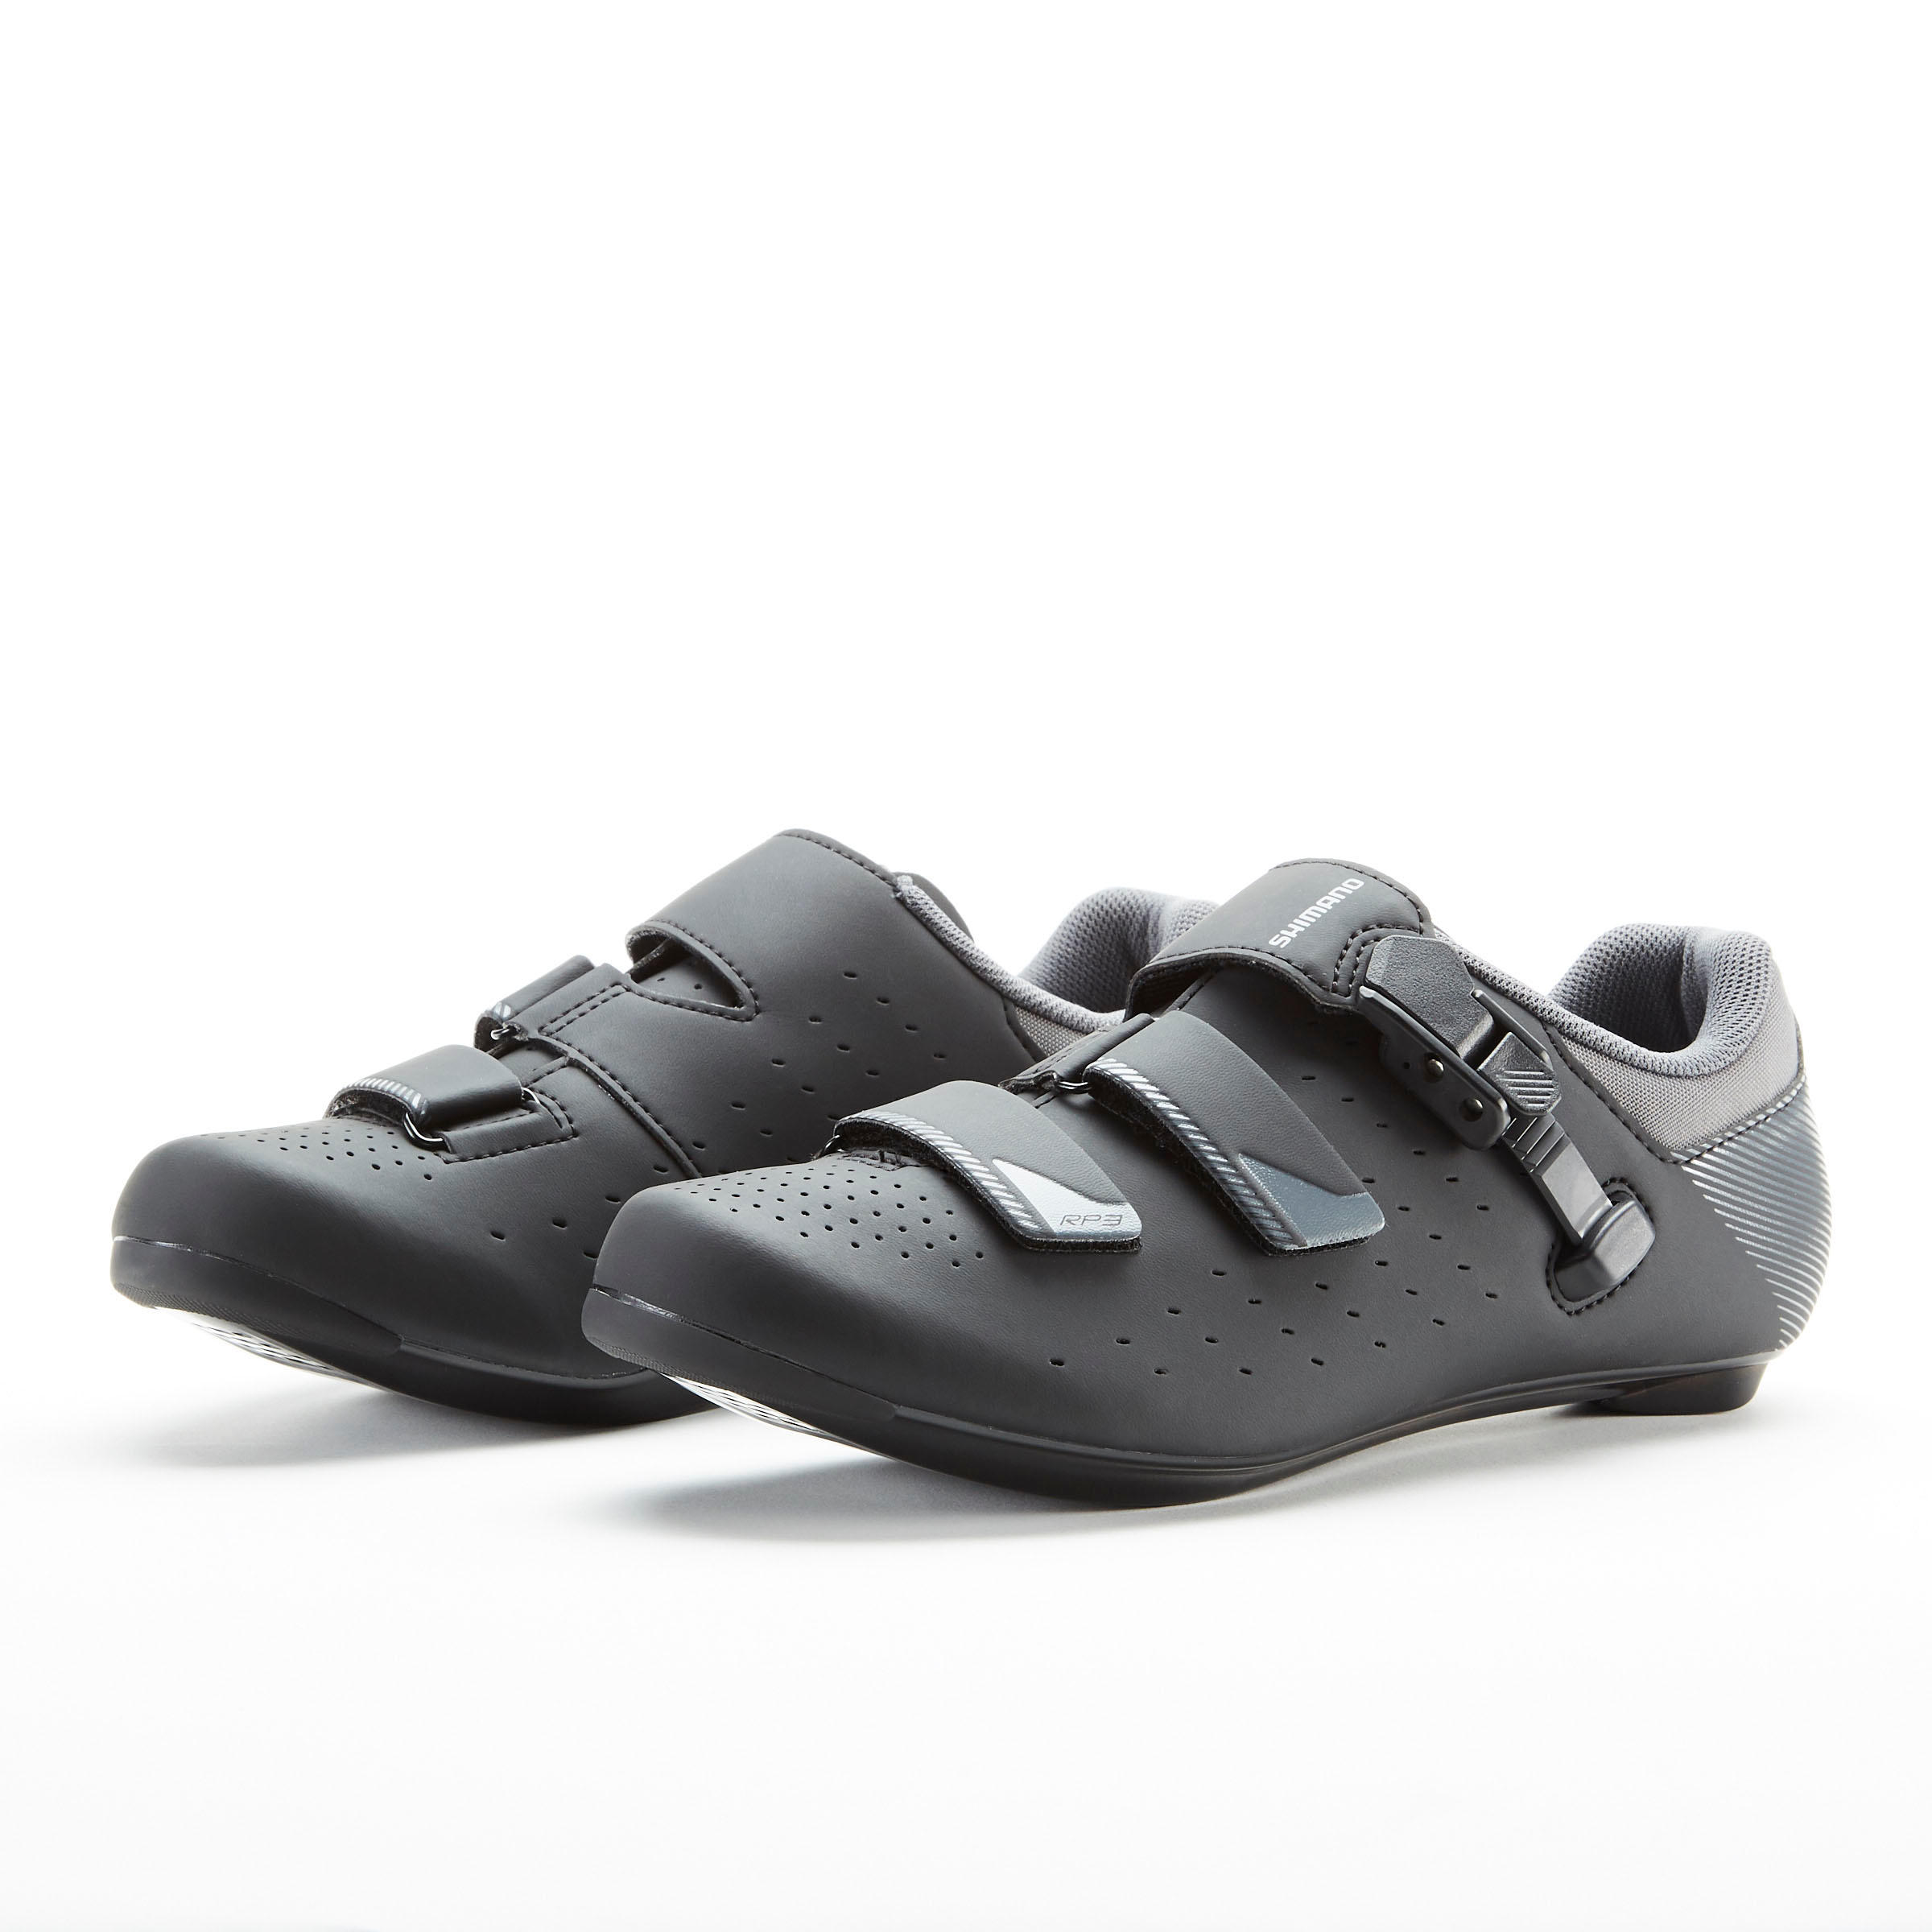 shimano rp3 road shoes black